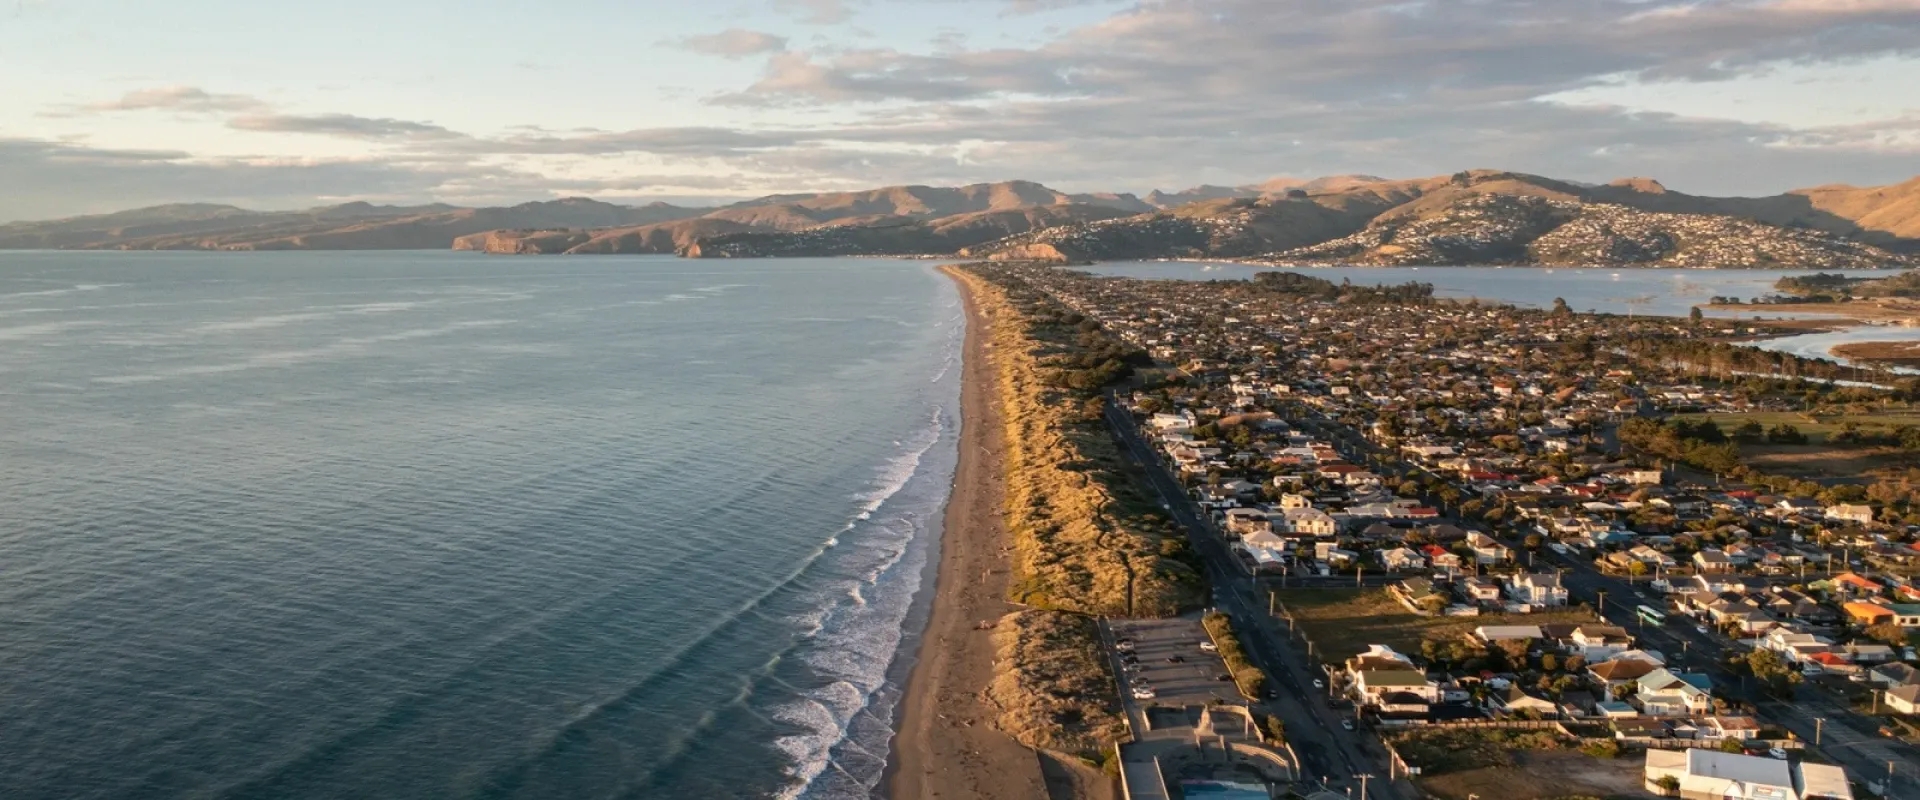 The coastline near Christchurch, New Zealand